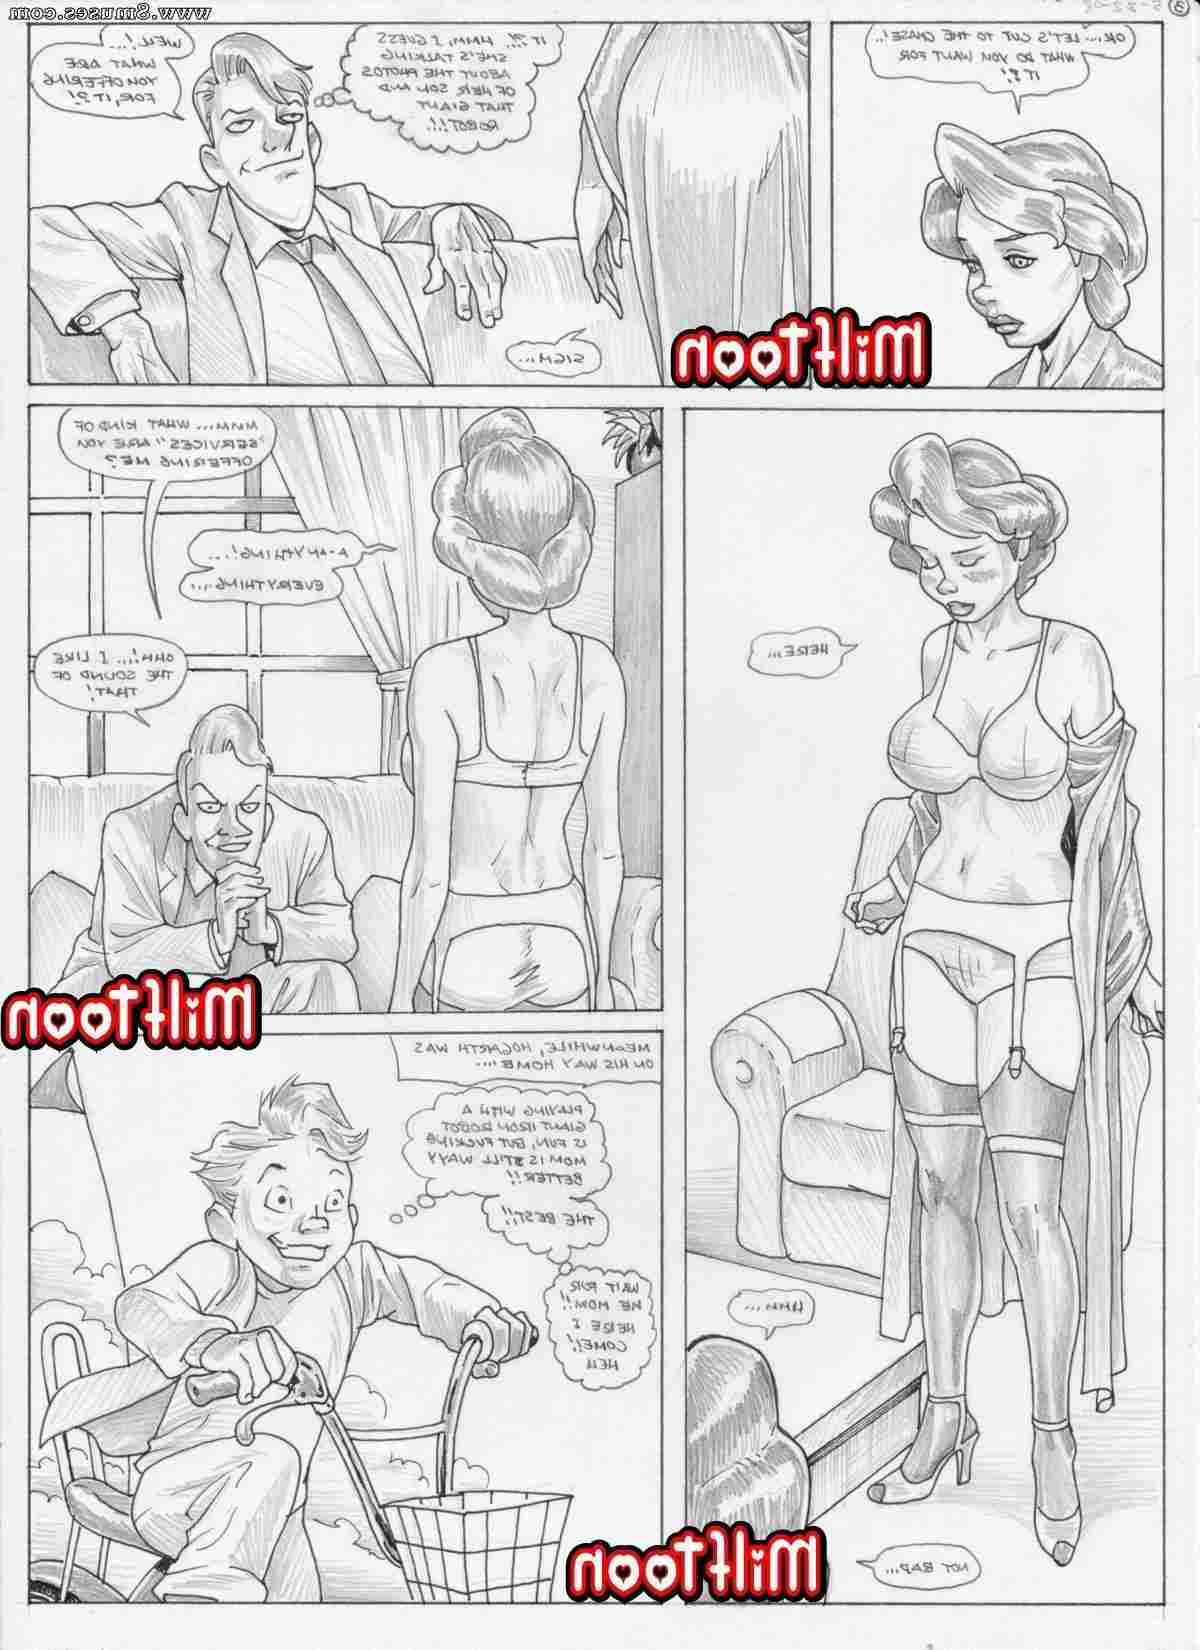 MilfToon-Comics/Iron-Giant/Iron-Giant-2 Iron_Giant_2__8muses_-_Sex_and_Porn_Comics_4.jpg